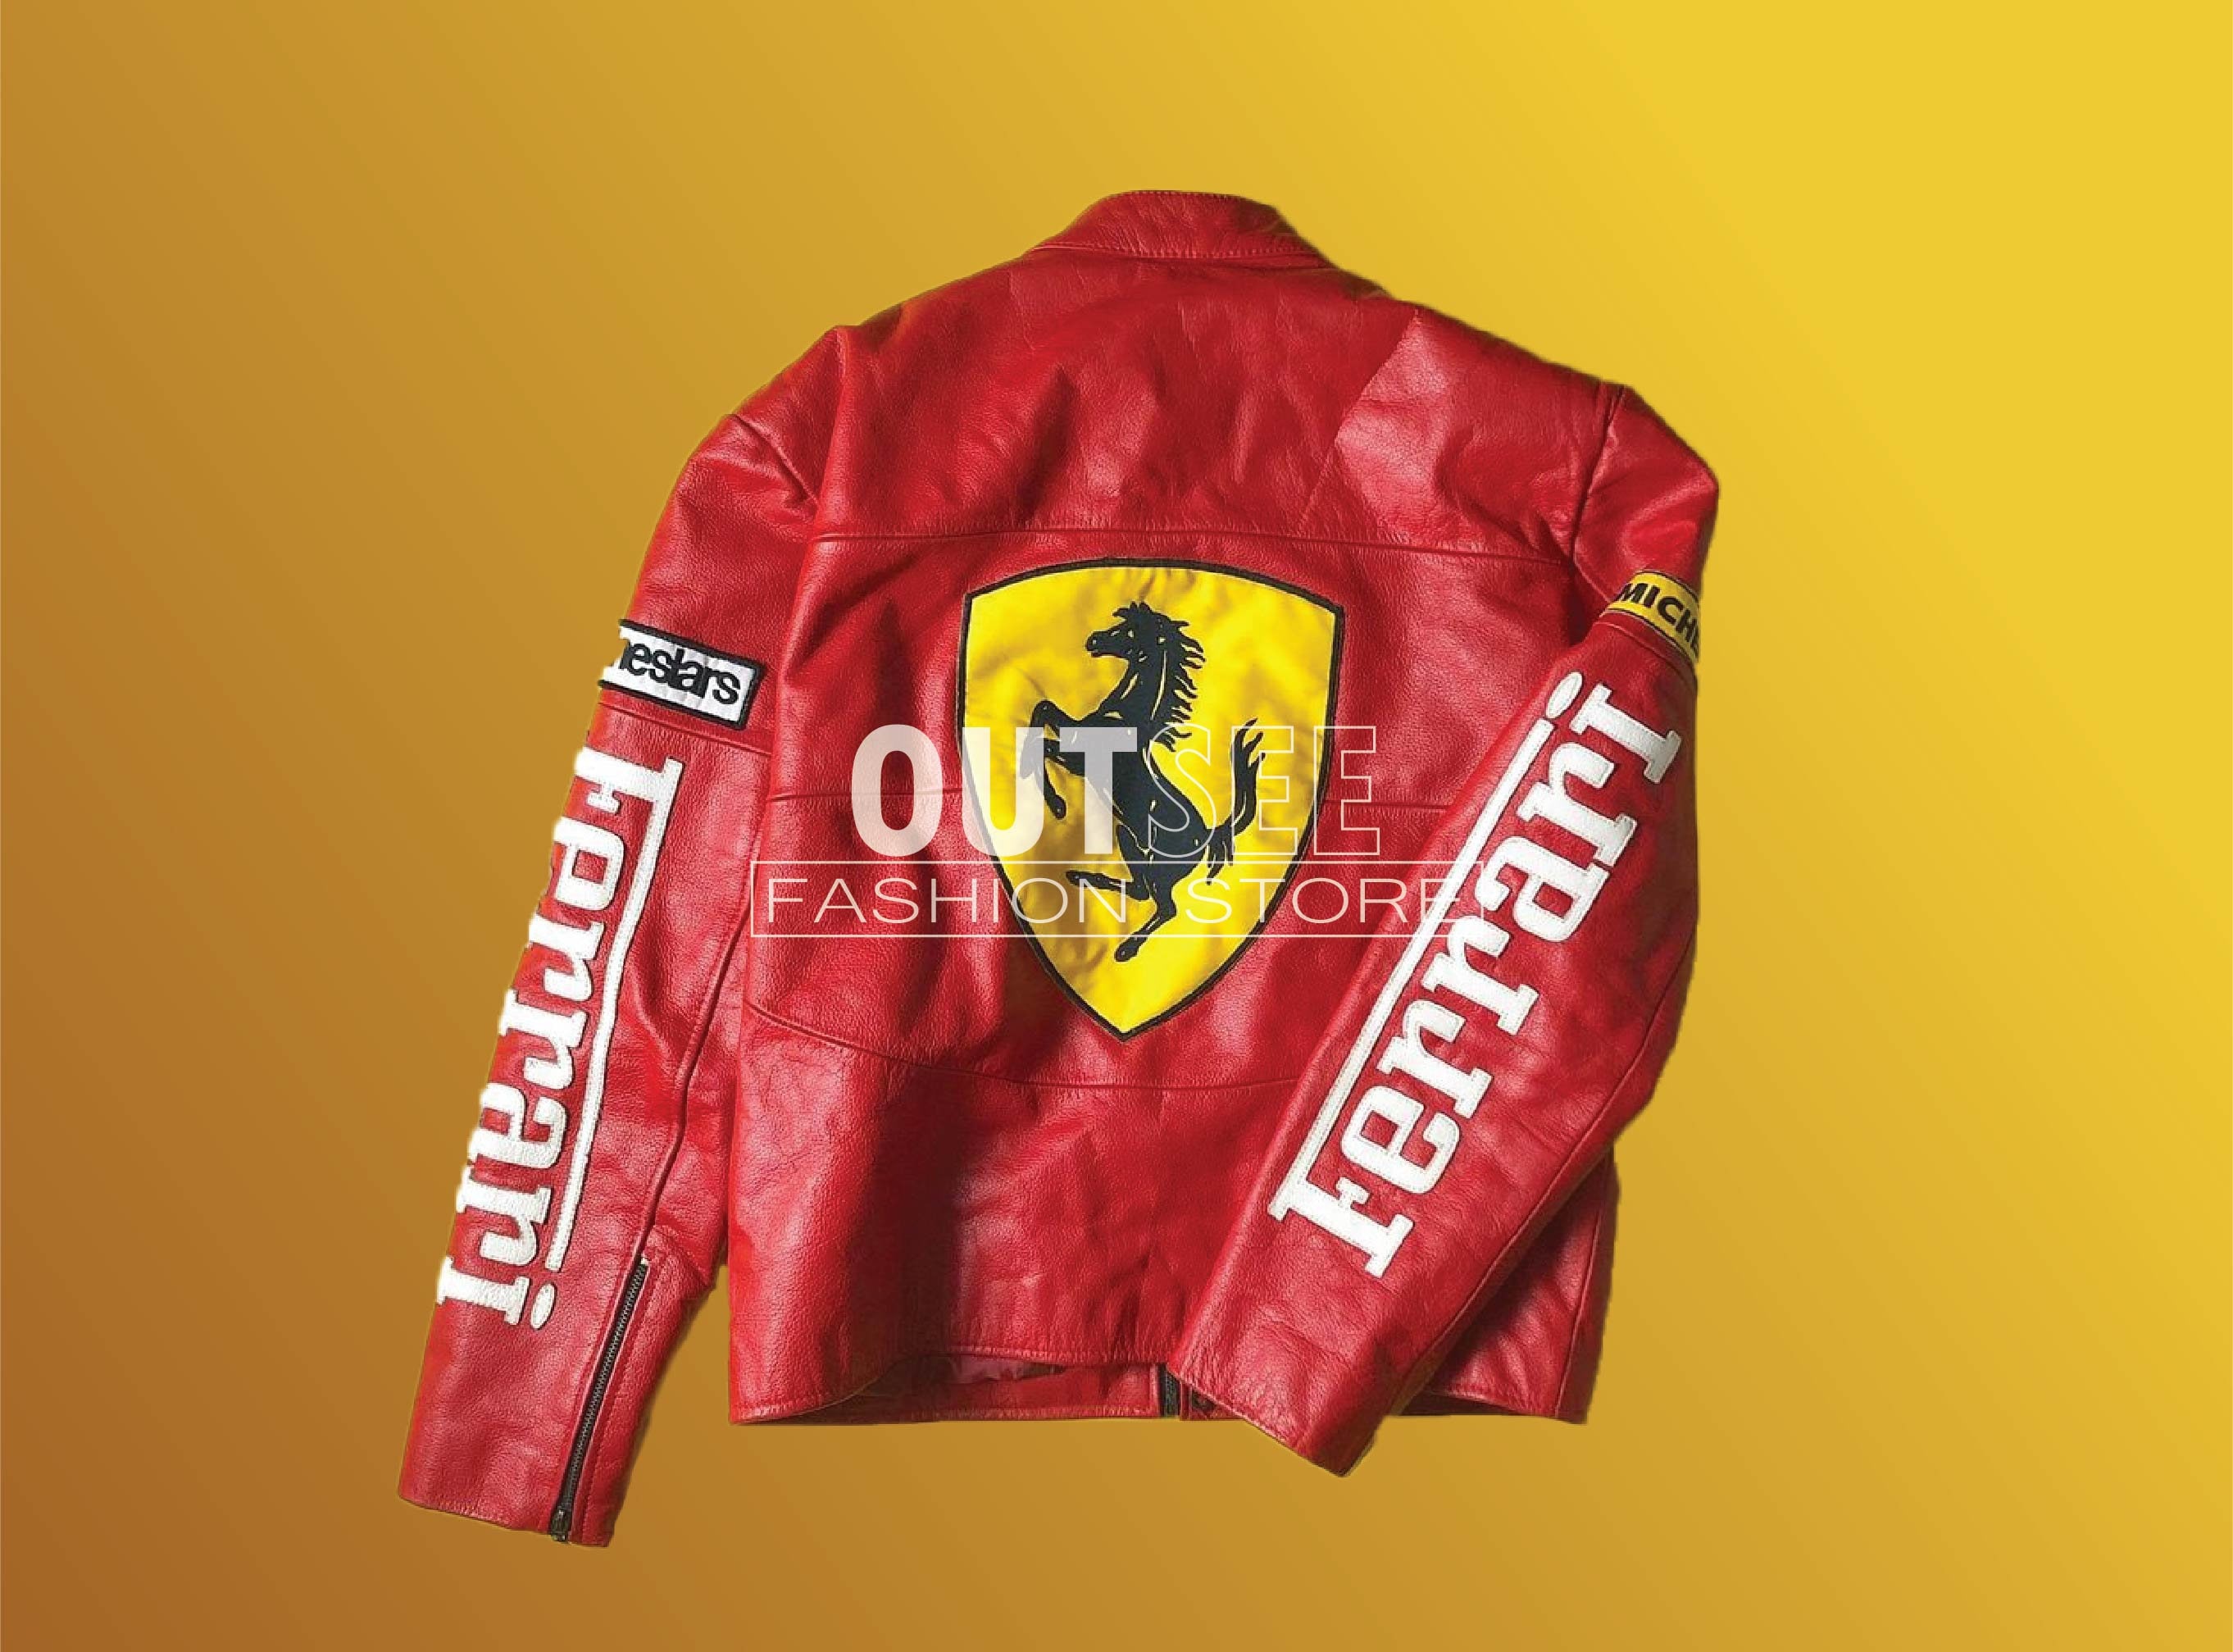 Vintage Ferrari F1 Racing Leather Jacket Riders Men Size S Black Red Logo  used